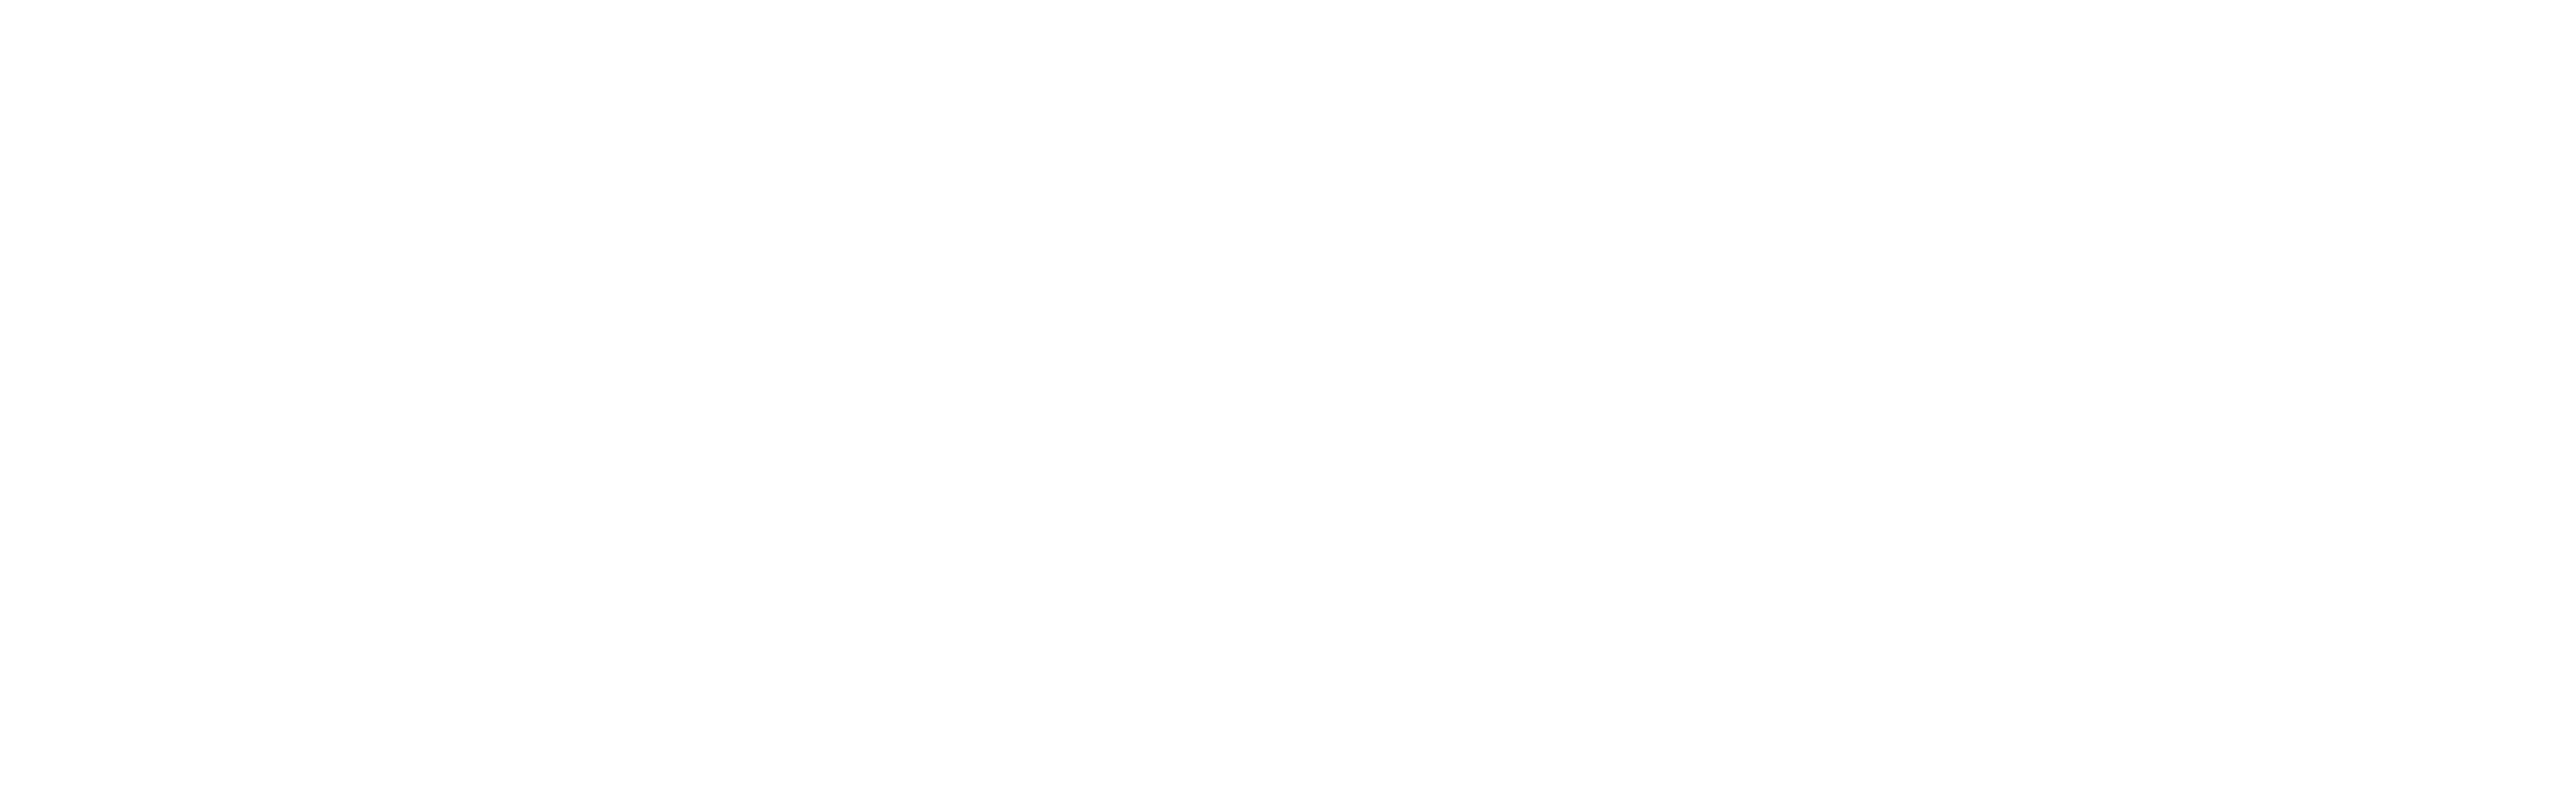 Kanai Wealth Management